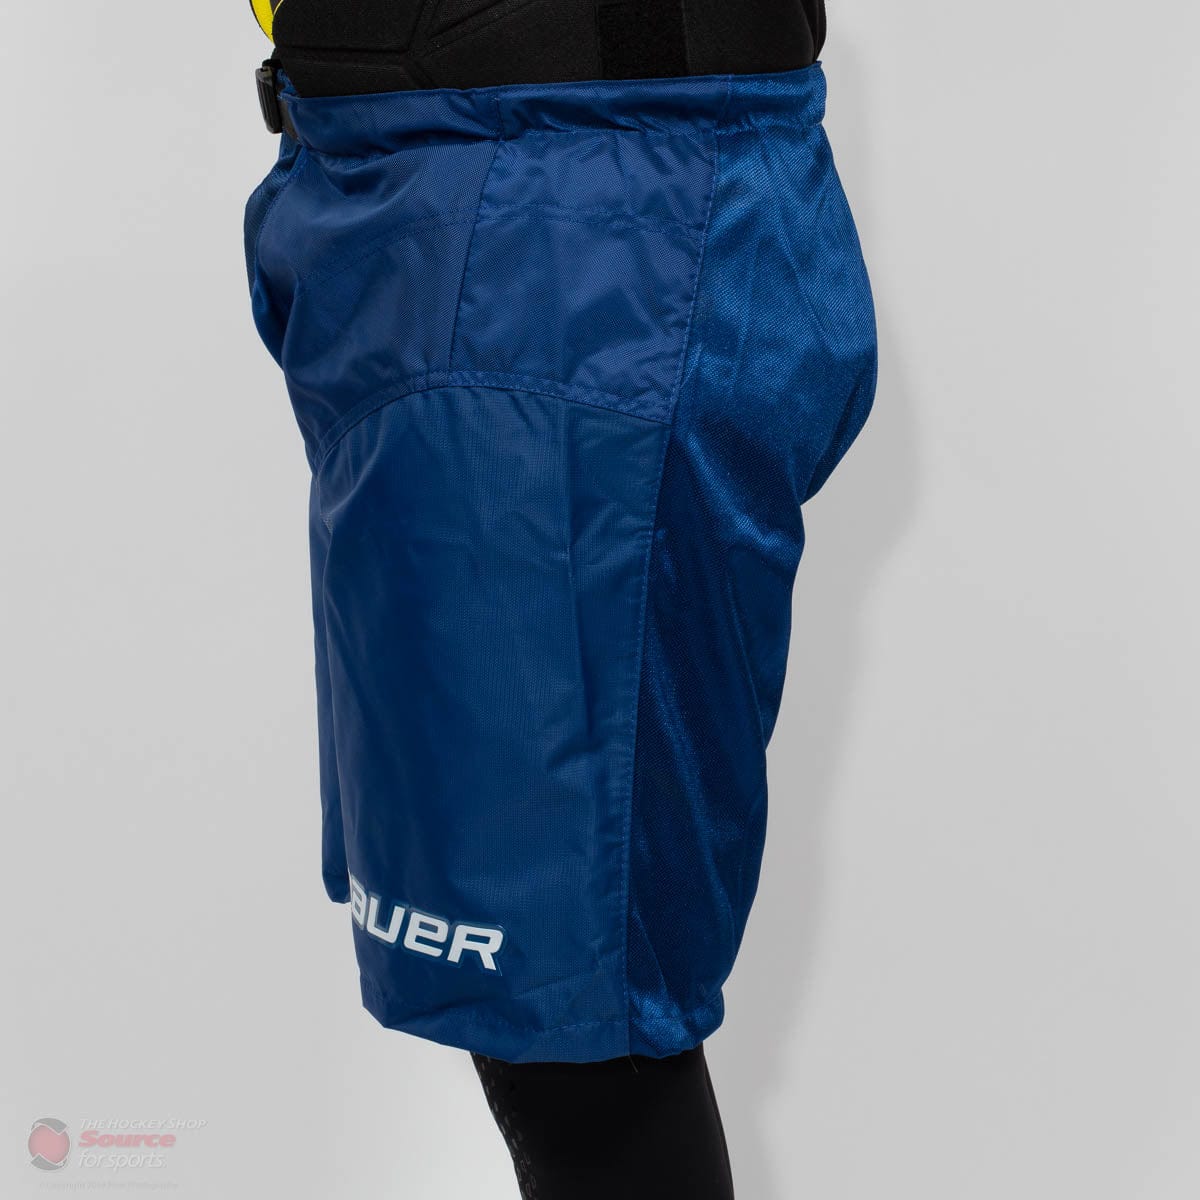 Bauer Supreme Senior Hockey Pant Shells